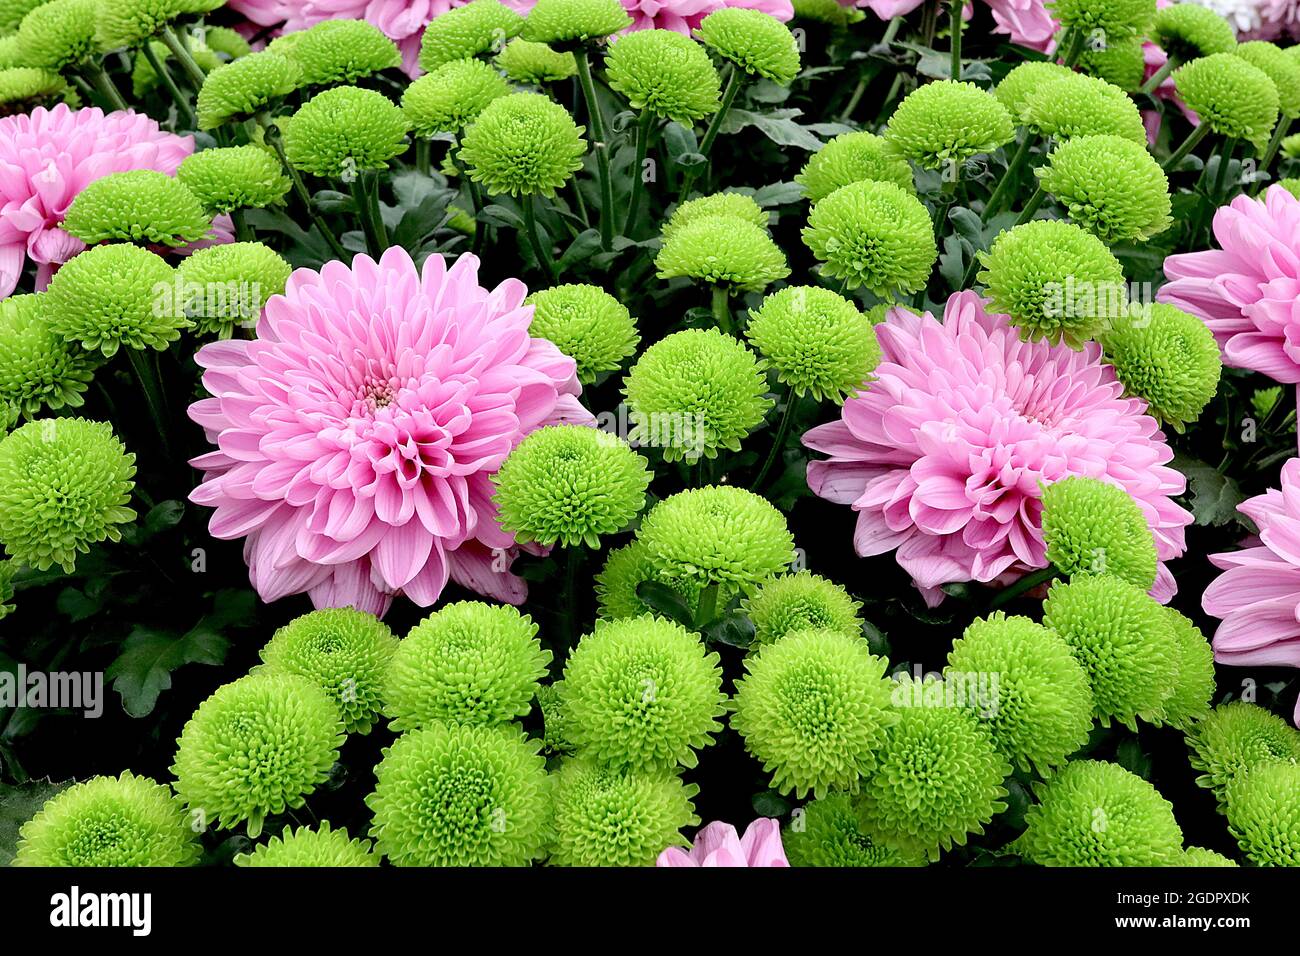 Chrysantheme ‘Feeling Green’ leuchtend grüne Blüten, Chrysantheme ‘Samson Purple’ mittelrosa Blüten mit eingekerbten Blütenblättern, Juli, England, Großbritannien Stockfoto